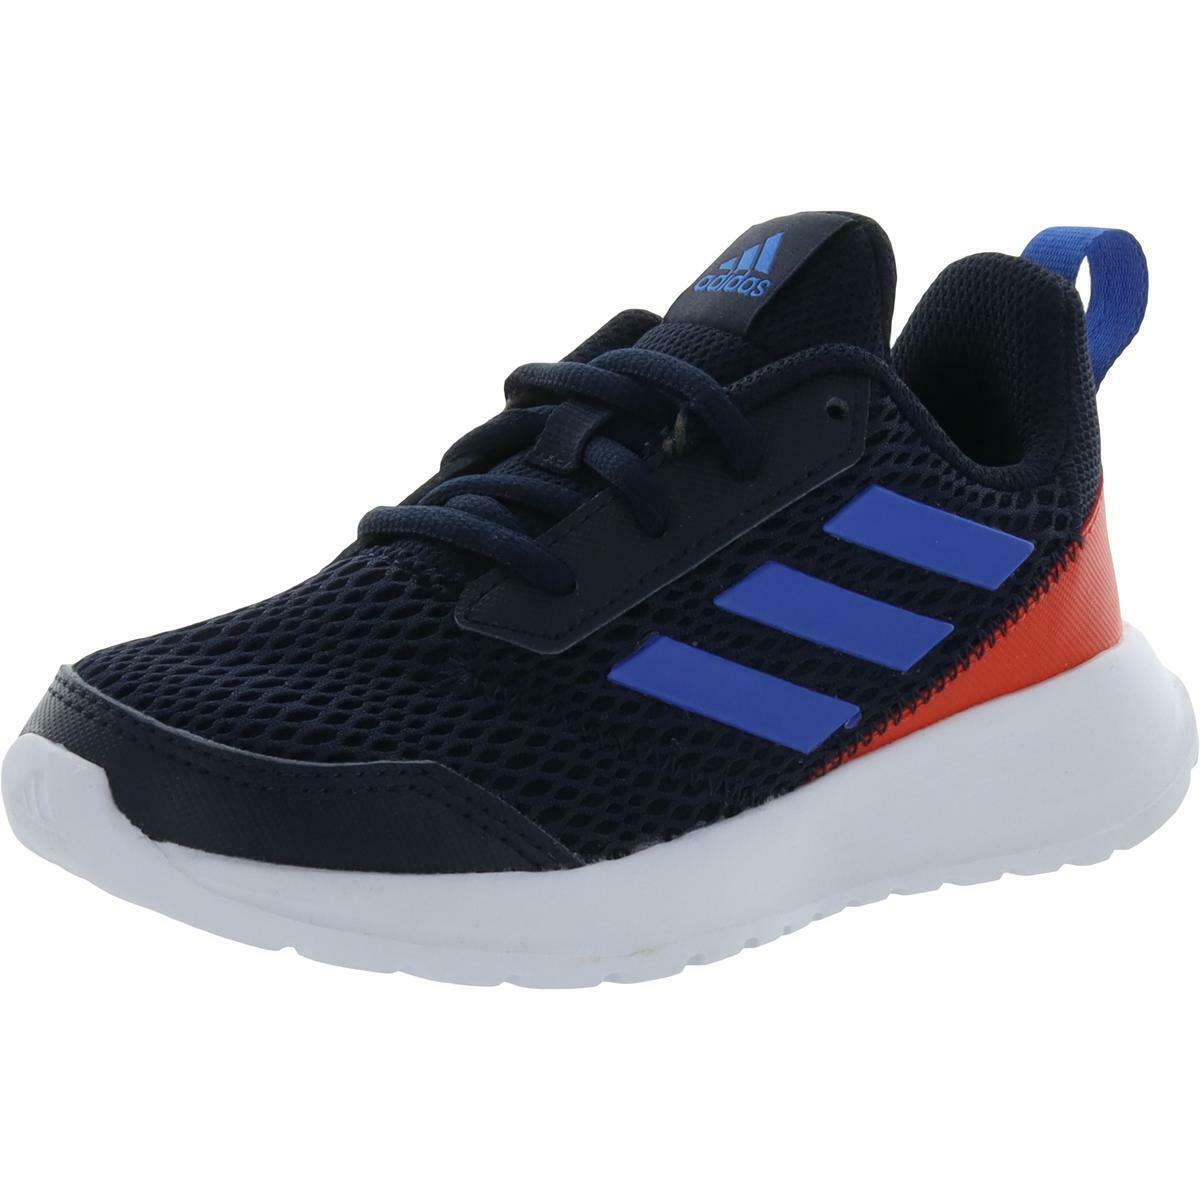 Adidas Boys Blue Running Shoes Sneakers 11.5 Medium (D) Little Kid BHFO 1224